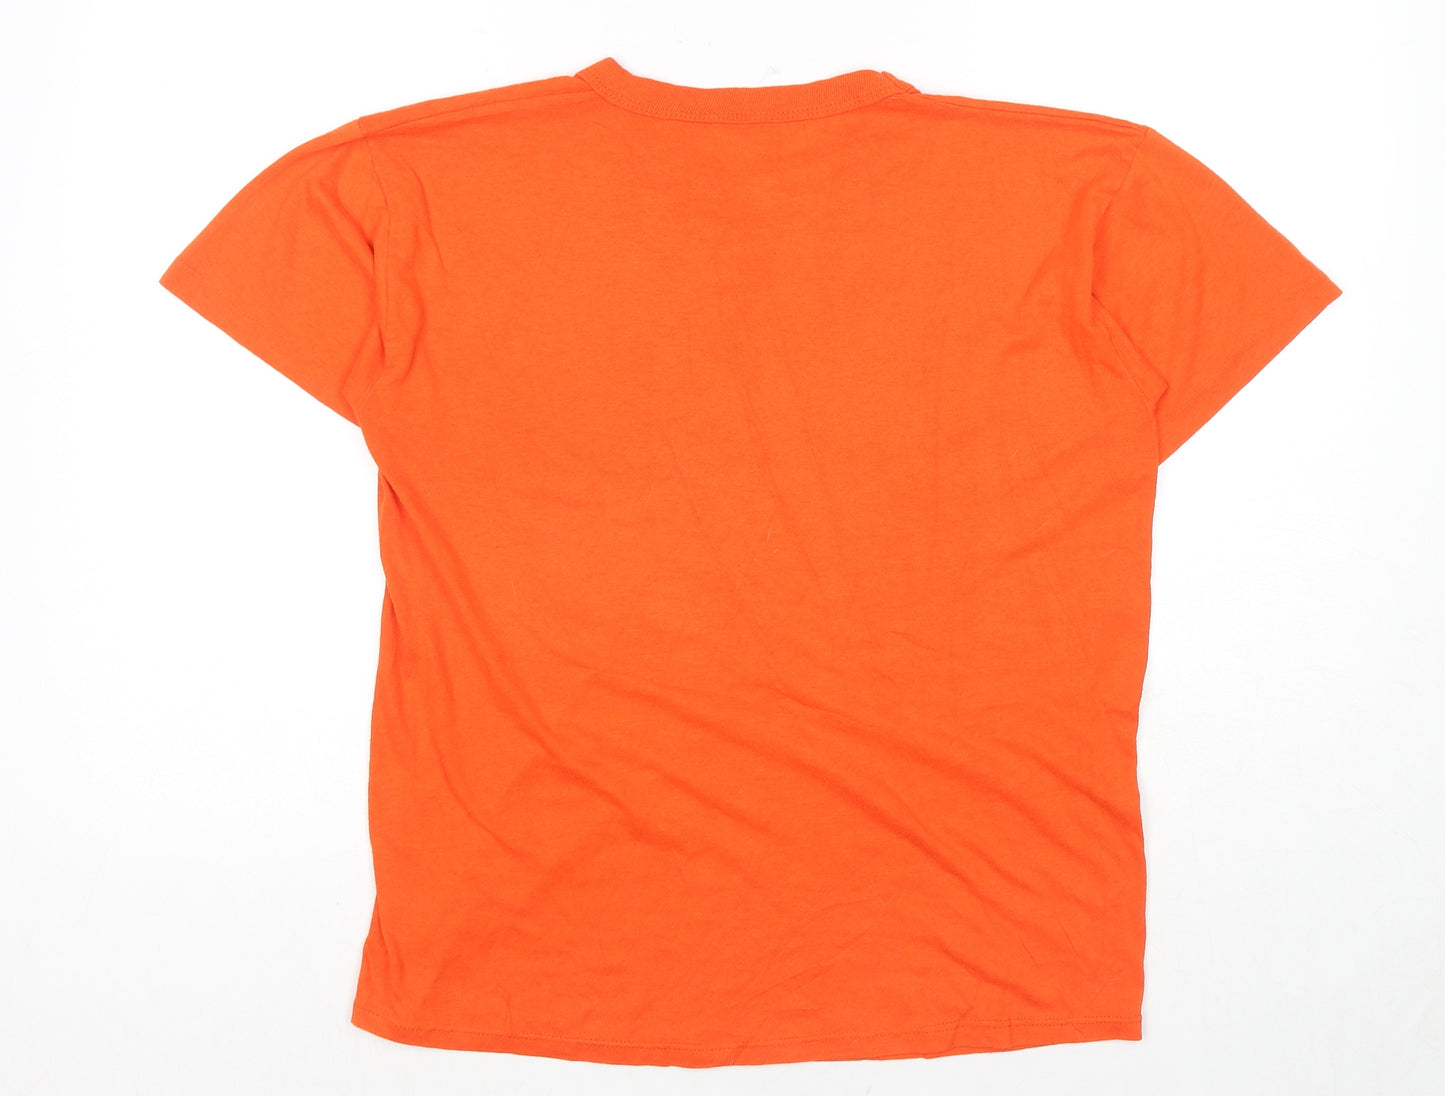 Russell Athletic Womens Orange Cotton Basic T-Shirt Size M Round Neck